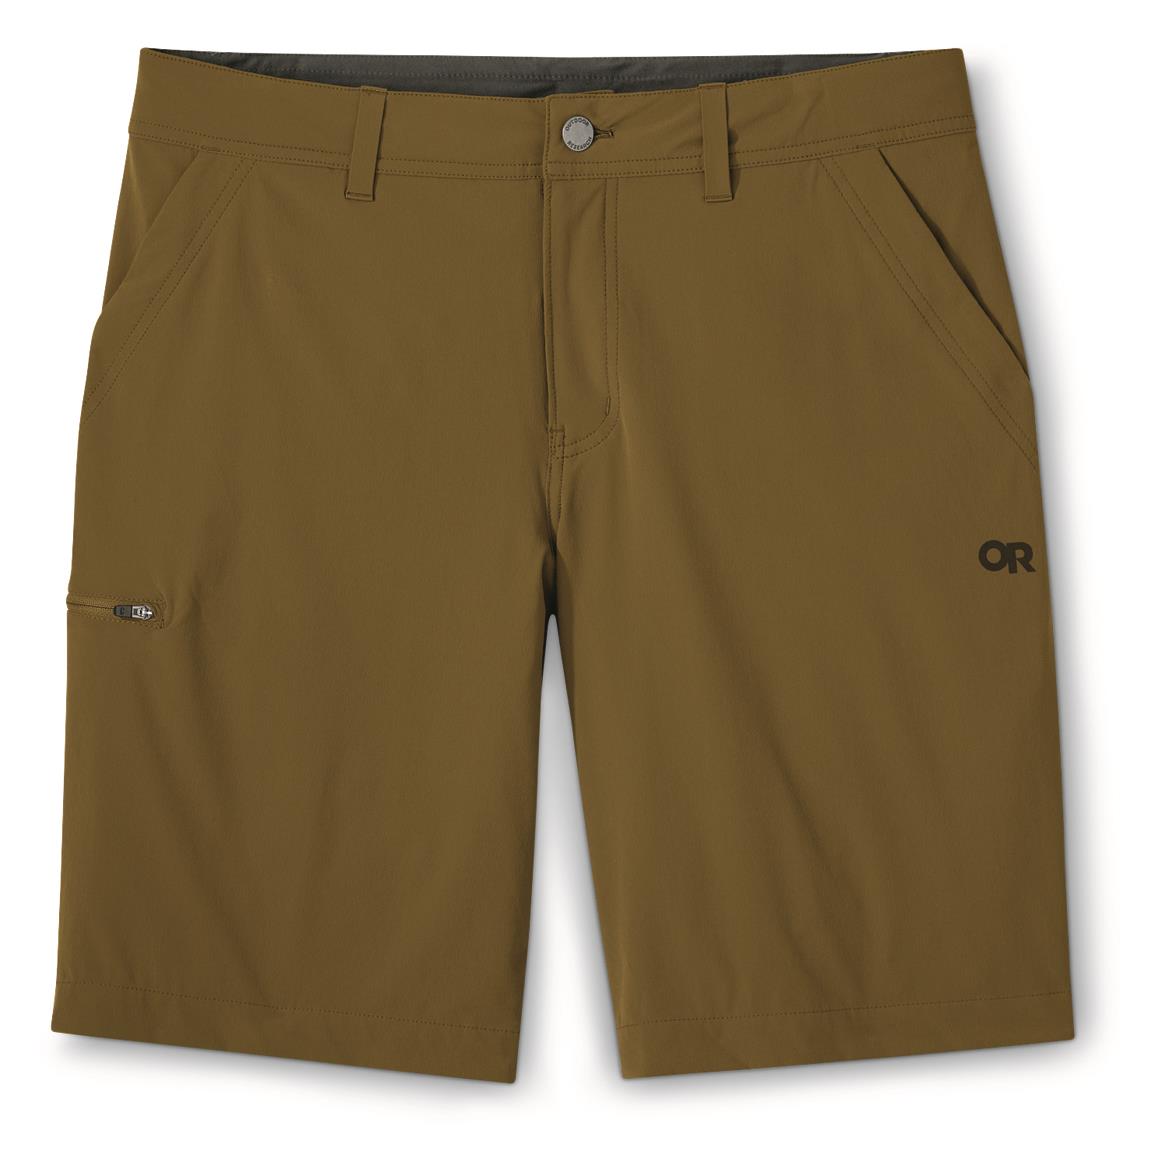 Outdoor Research Men's Ferrosi Shorts, 10" Inseam, Loden